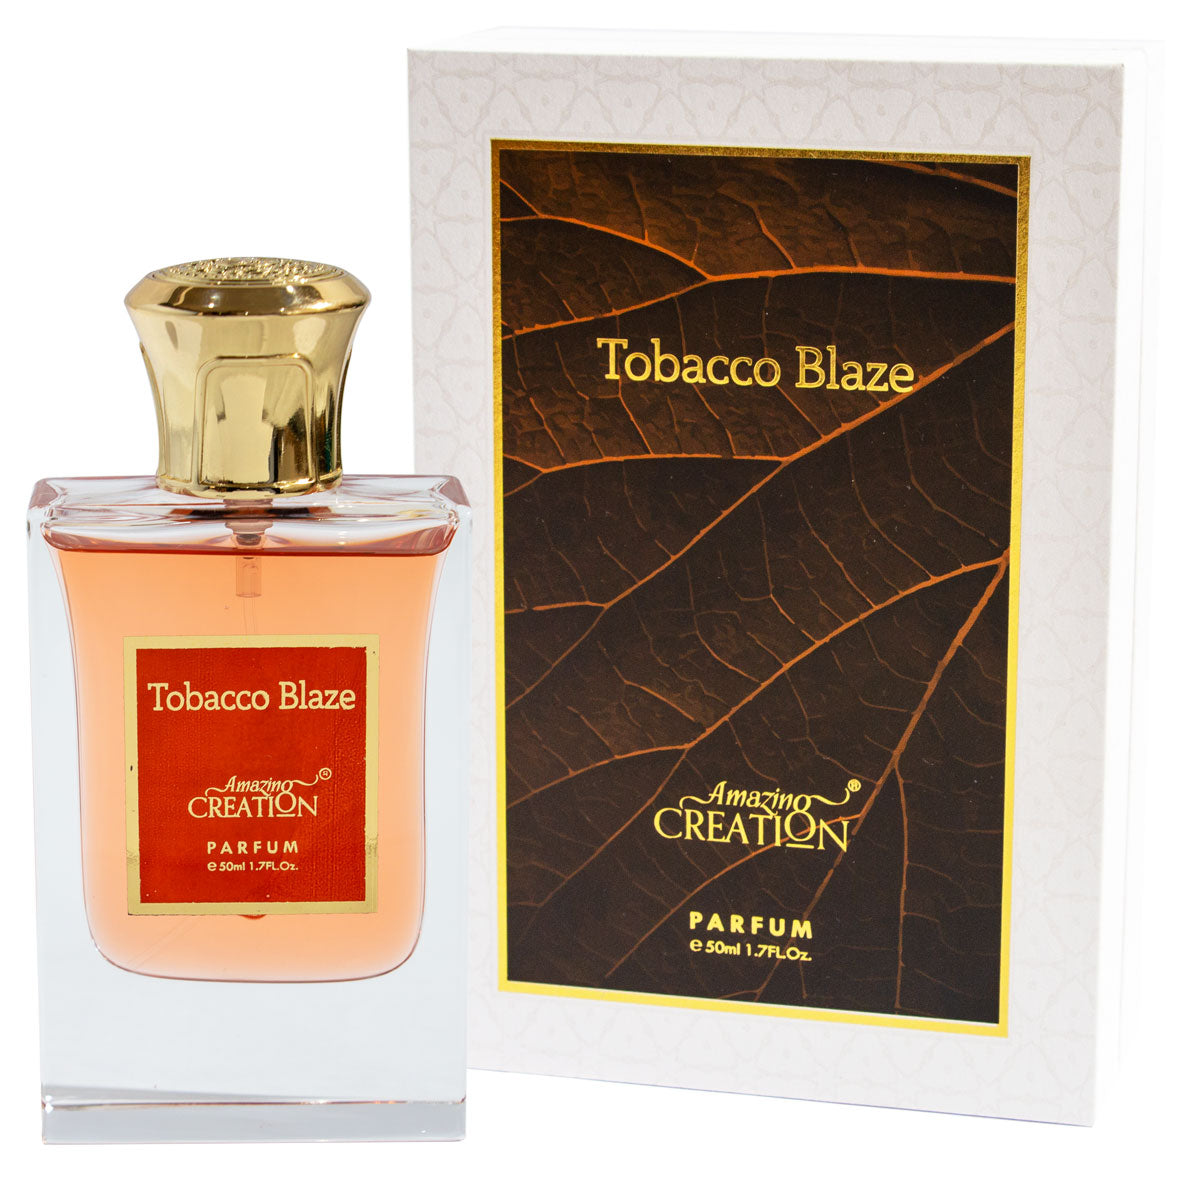 Tobacco Blaze by Amazing Creation, Perfume for Men & Women, Parfum, 50ml